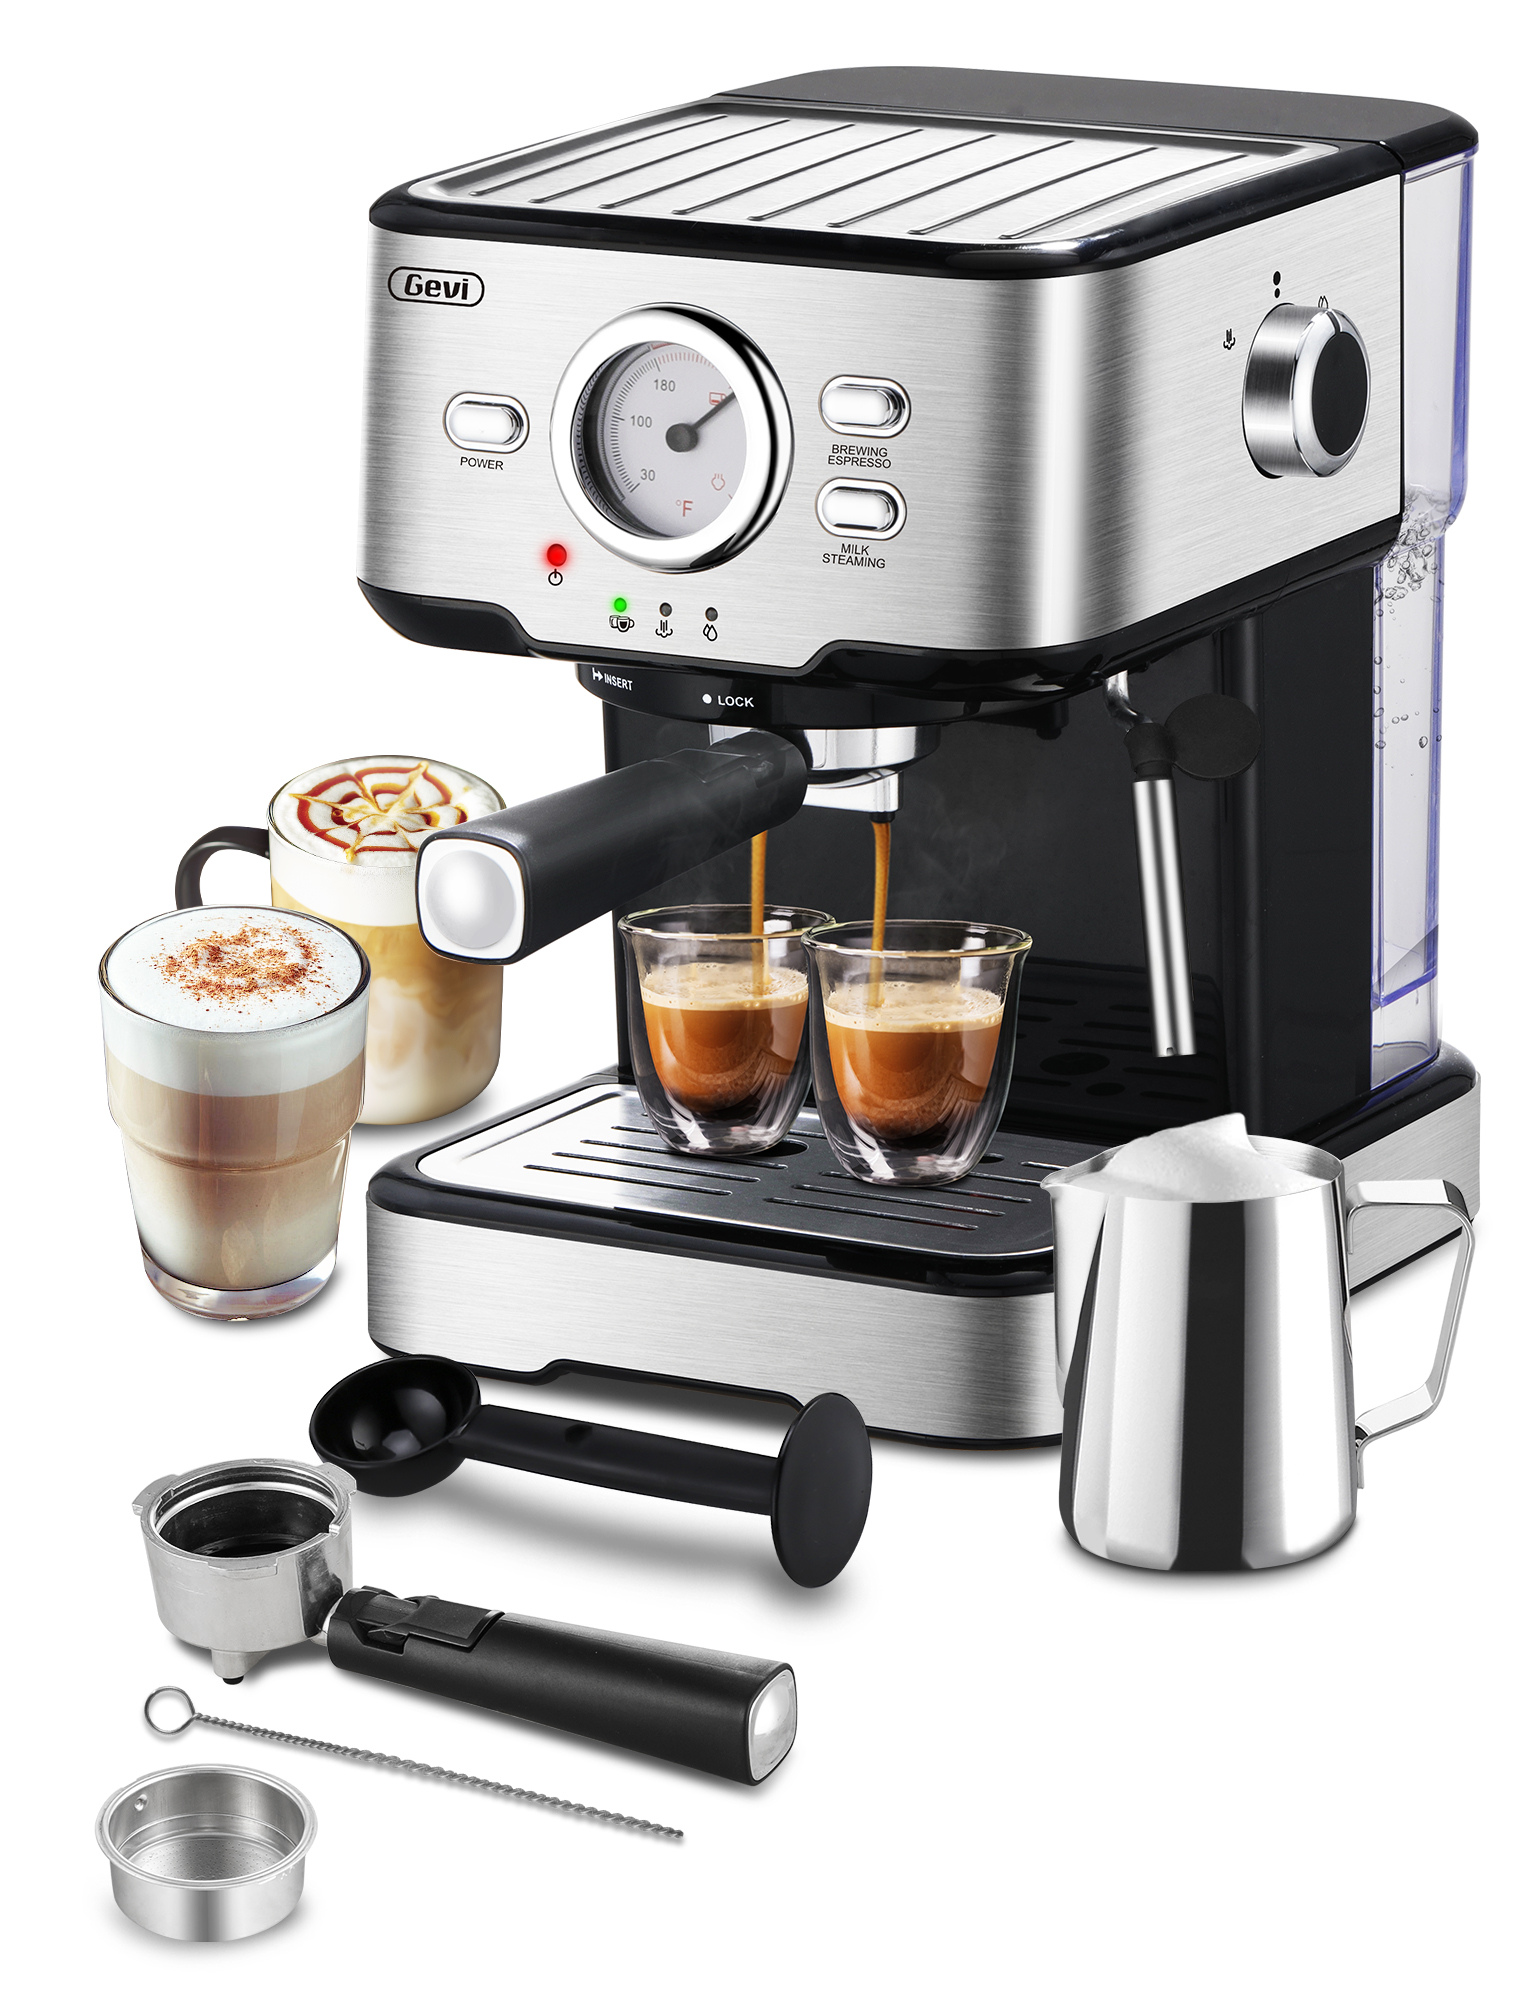 Gevi Espresso Machine with steamer 15 Bar Cappuccino Coffee Maker for Latte Mocha - image 1 of 9